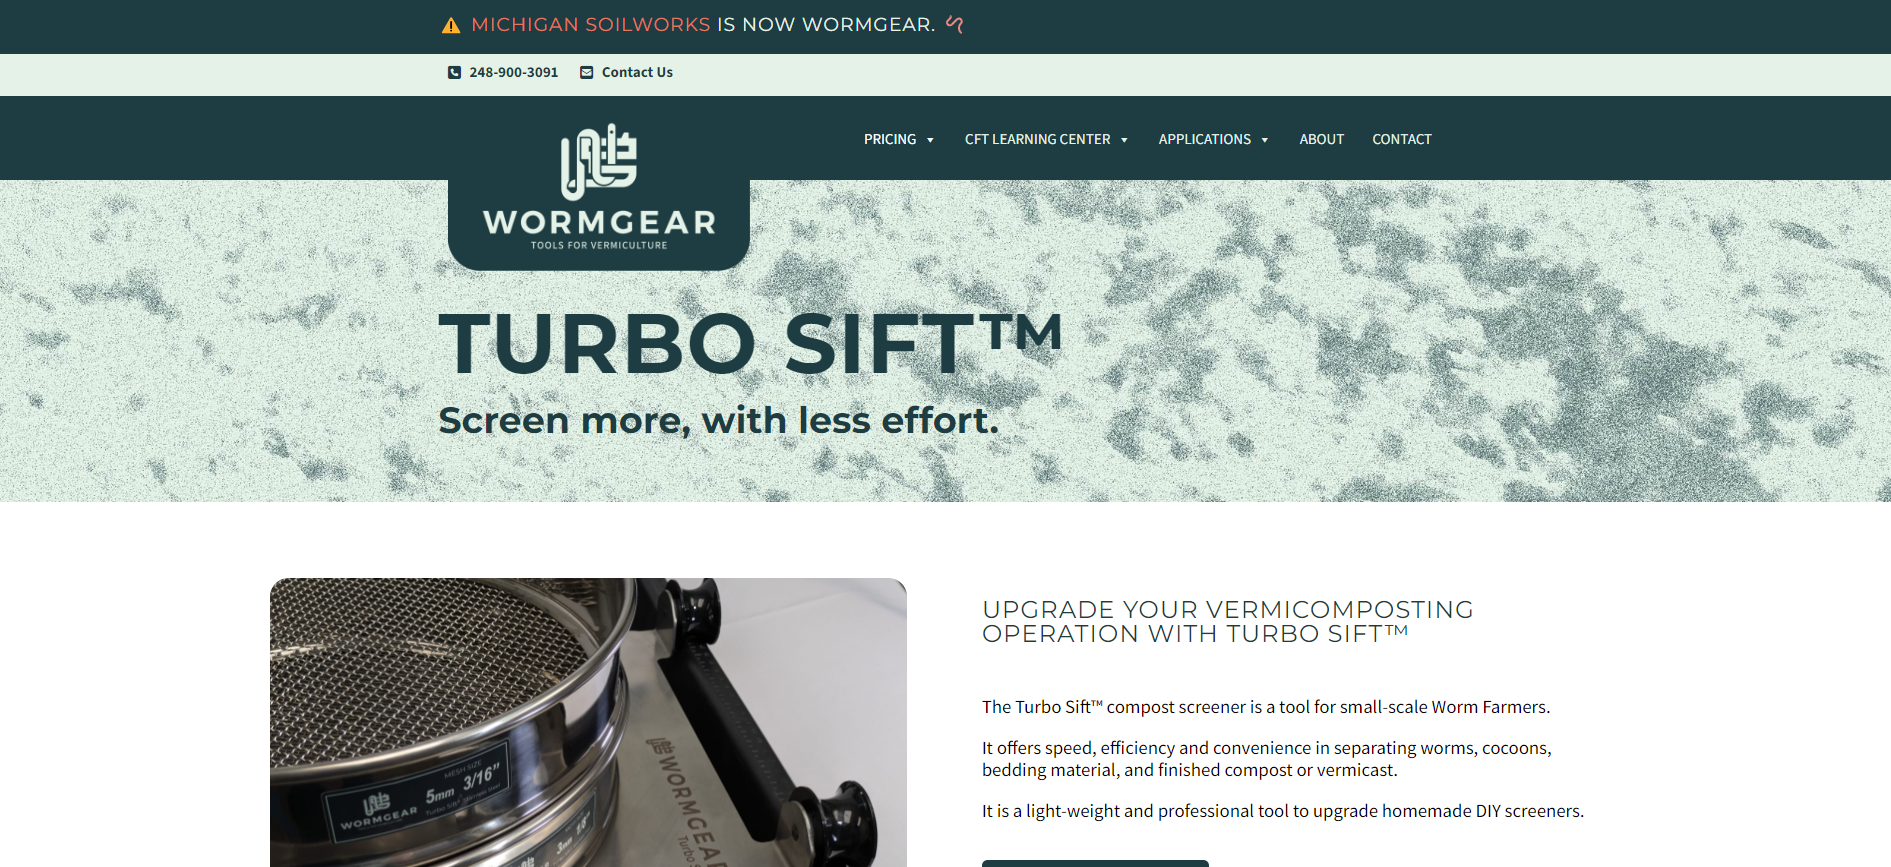 Wormgear - Turbo Sift™ Page